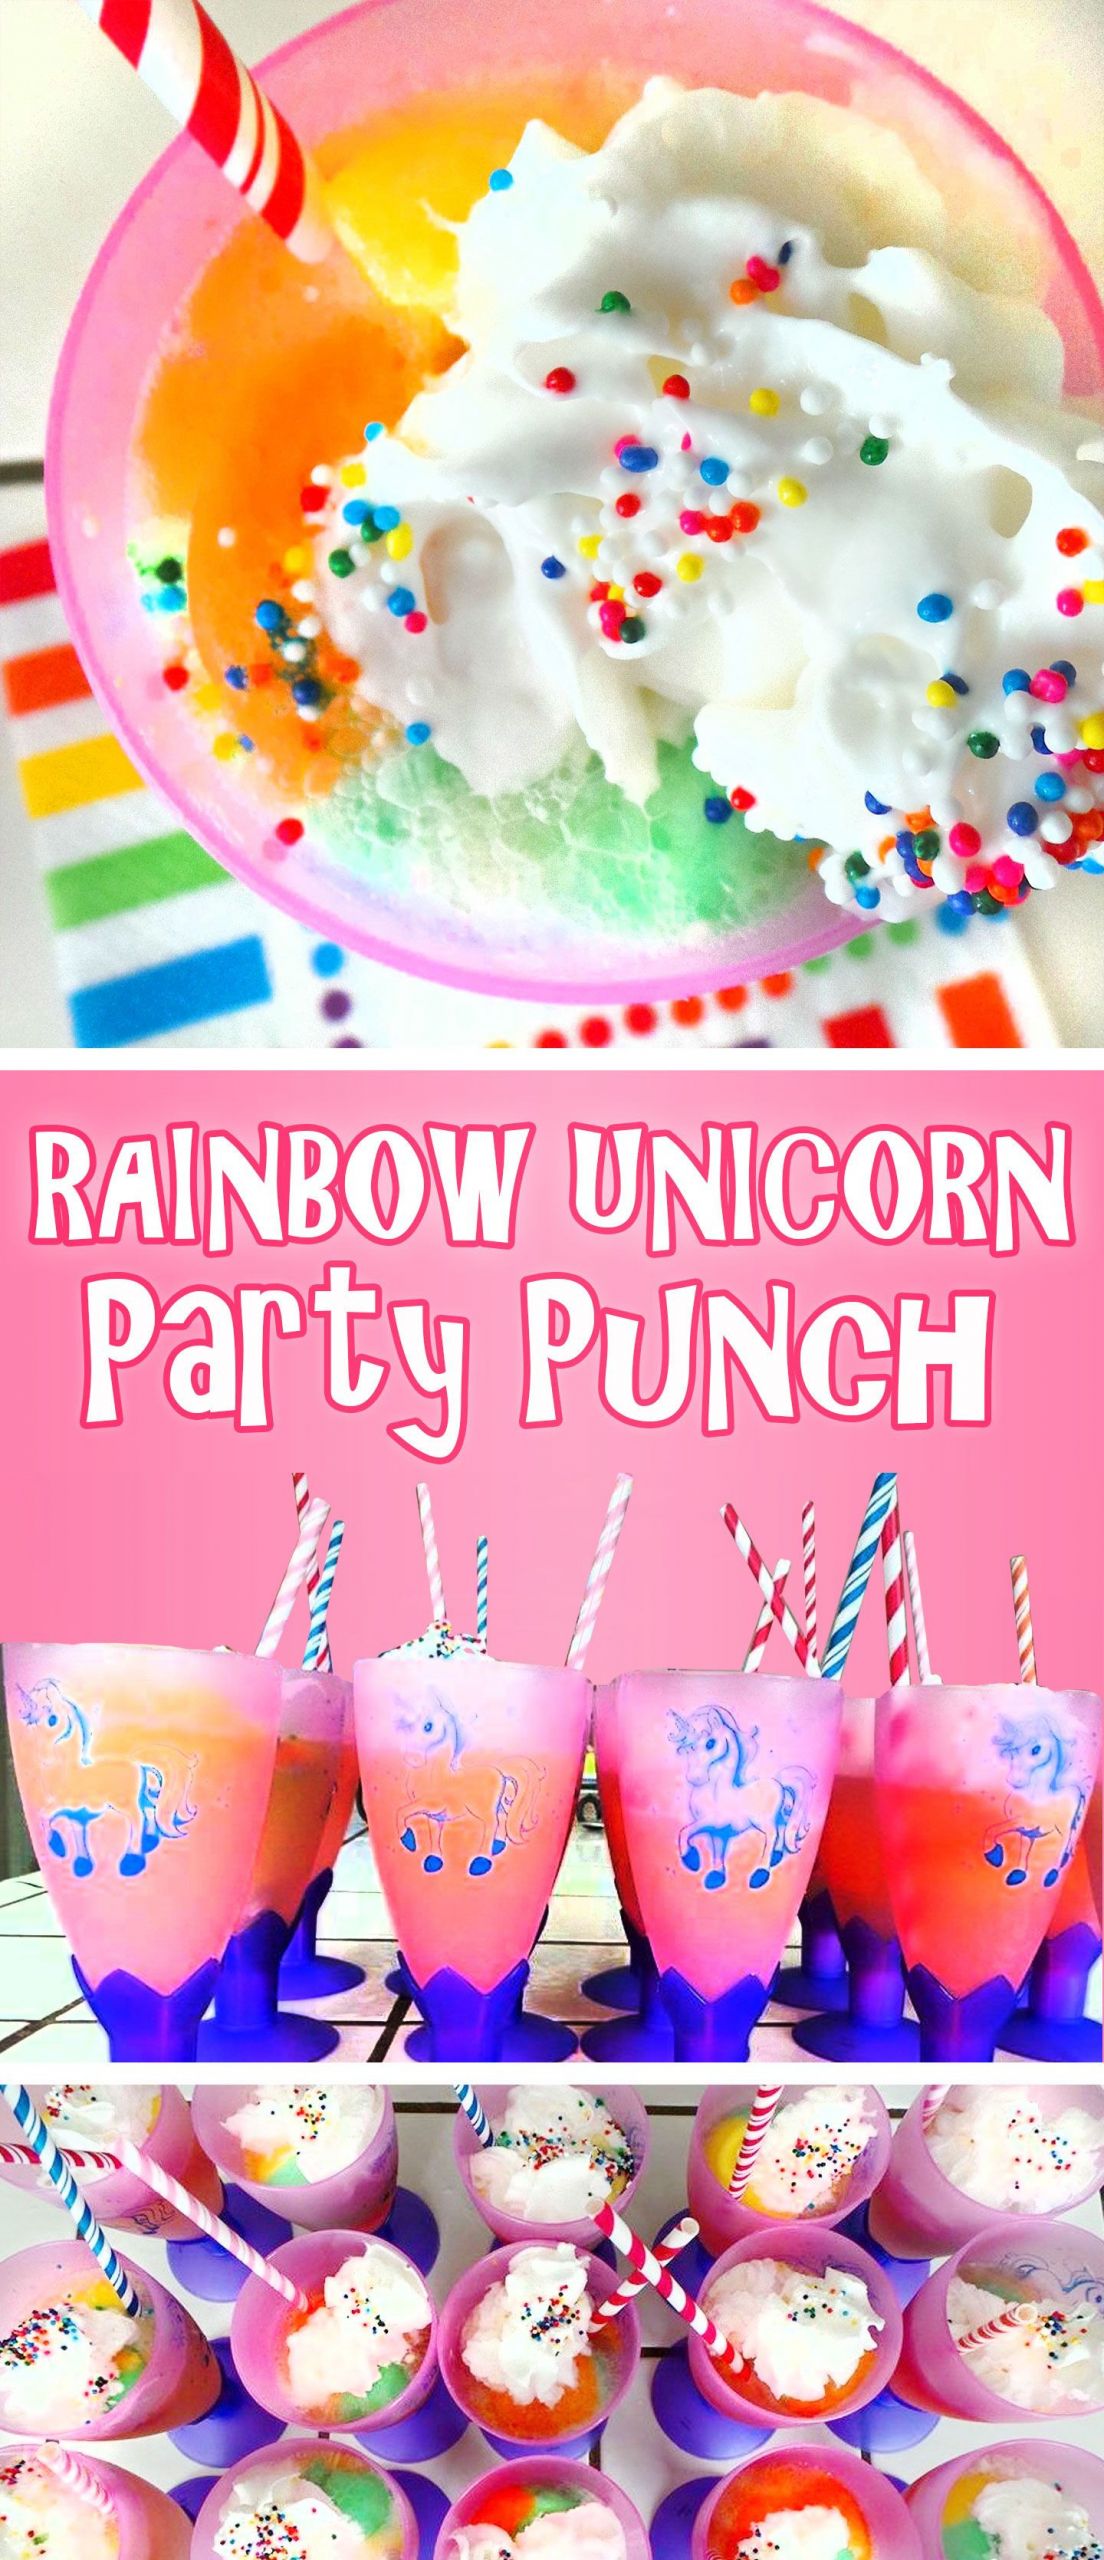 Rainbow Unicorn Party Ideas
 Rainbow Unicorn Party Punch Recipe